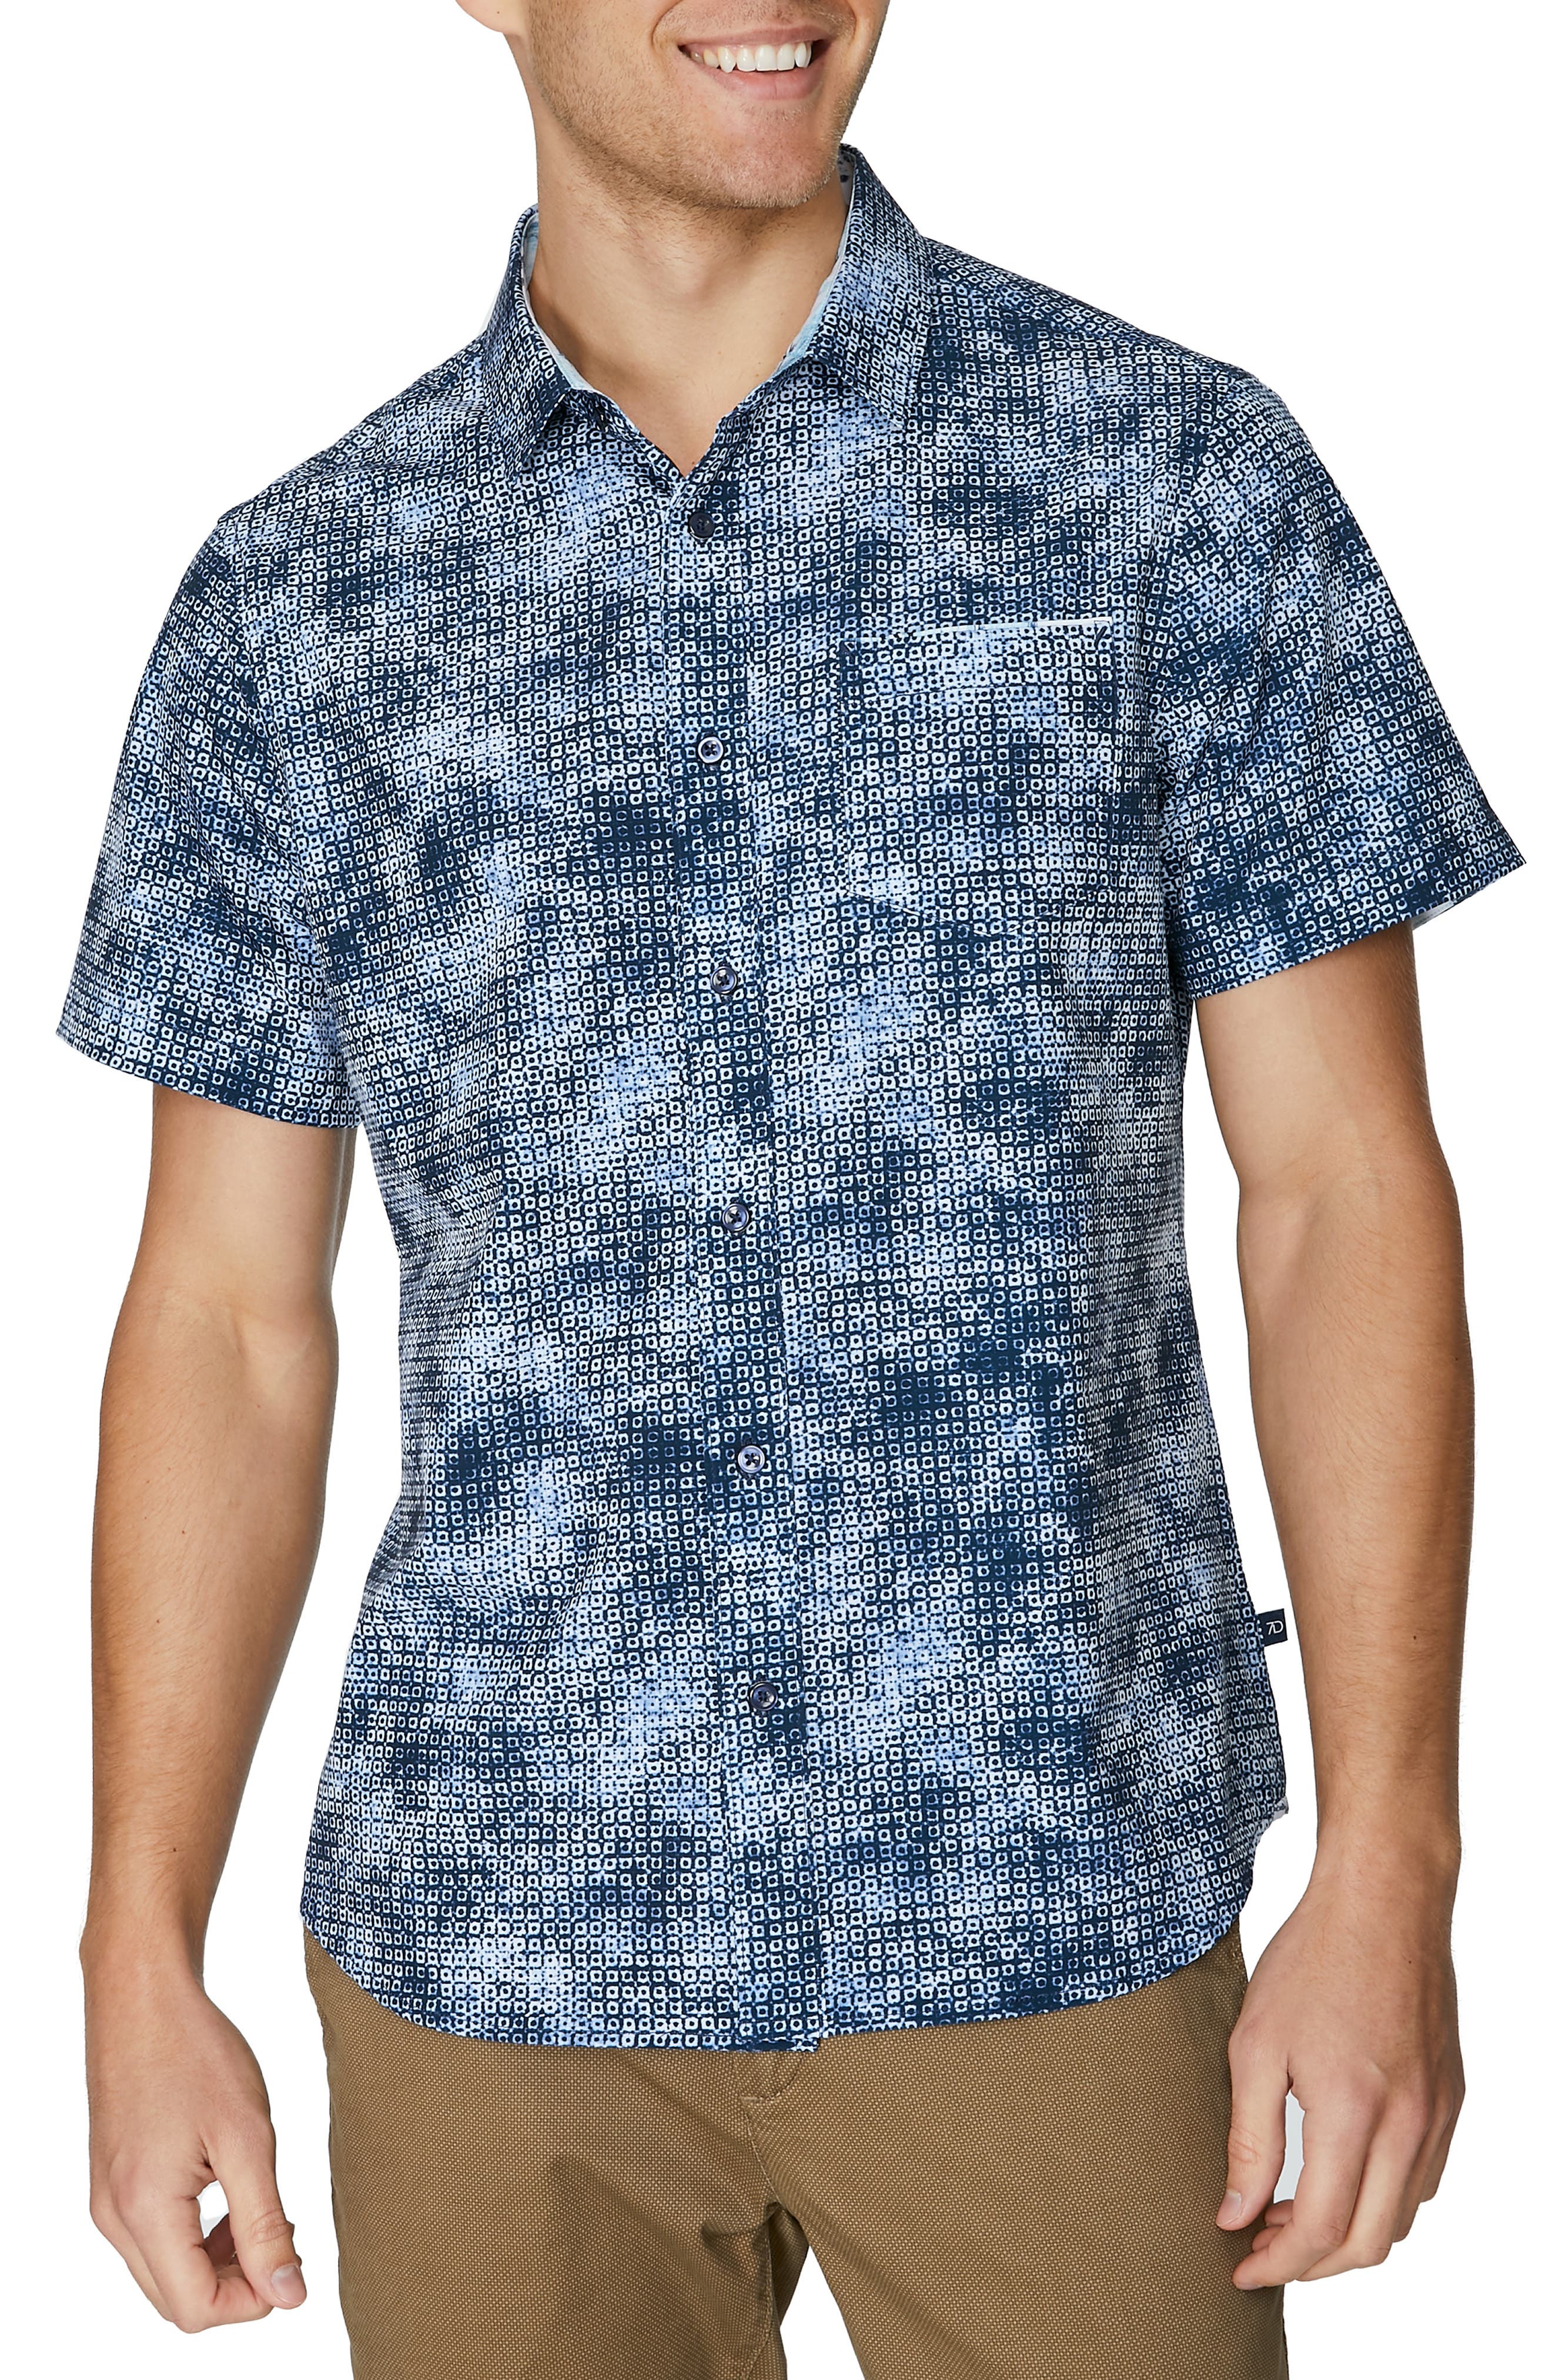 Retro Short Sleeve Button Down Shirts for Men Bohemian Diamond Printing Stitching 